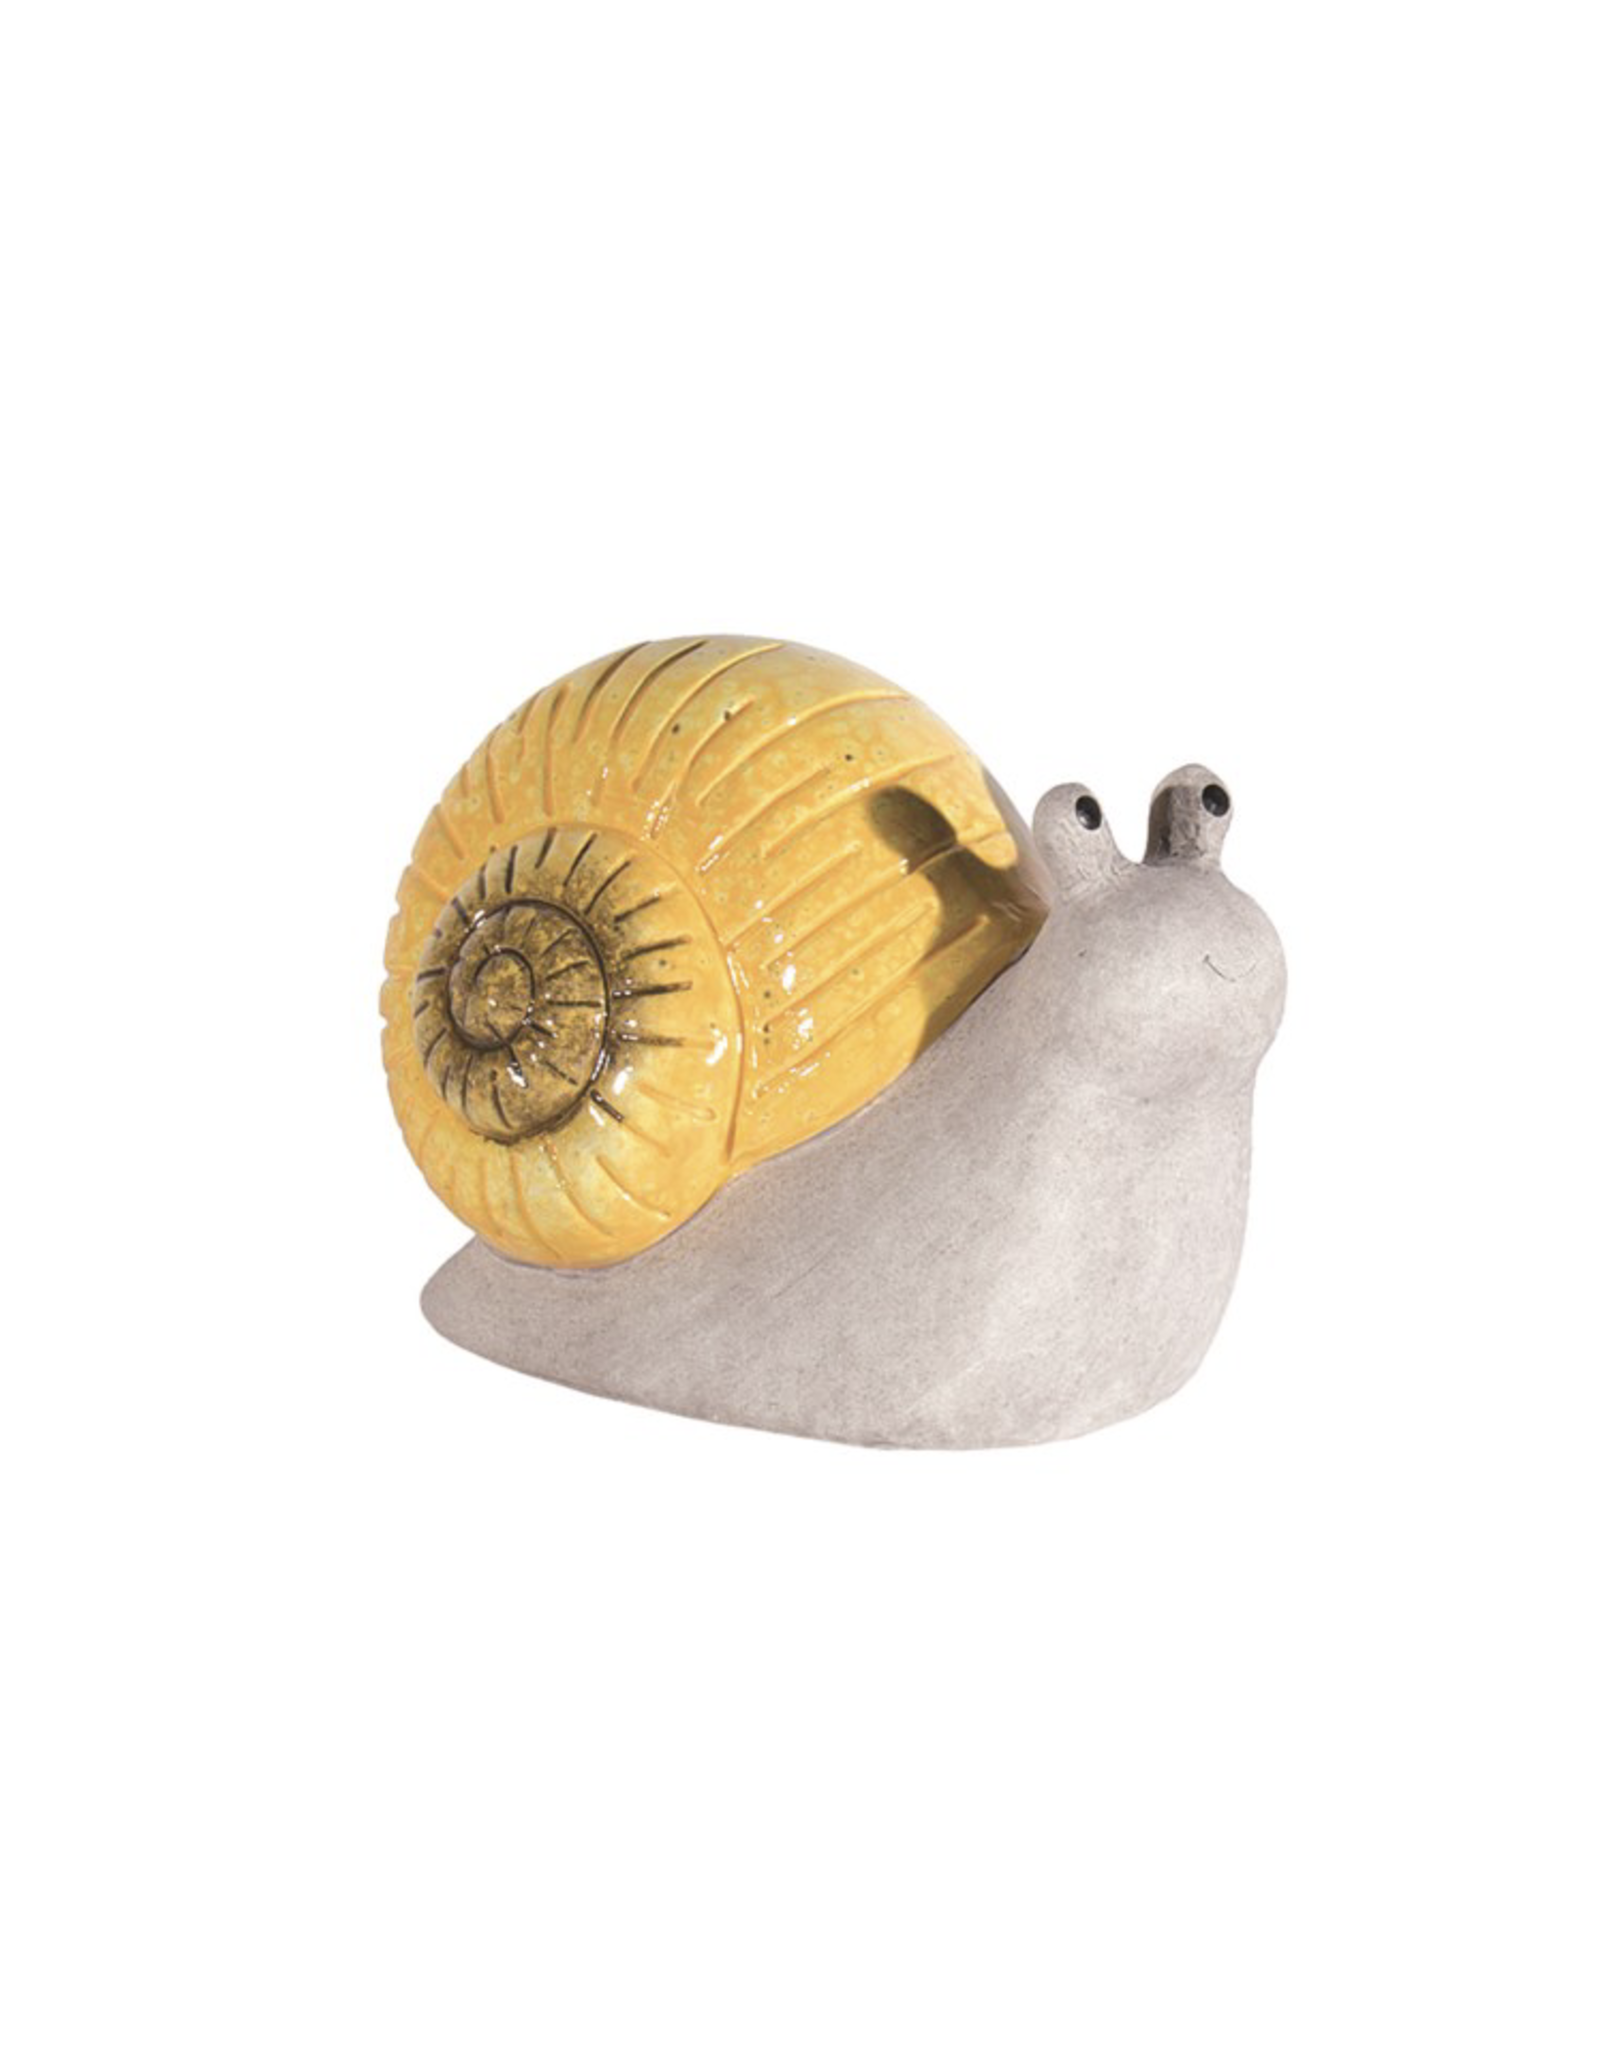 Ceramic Snail - 4"H